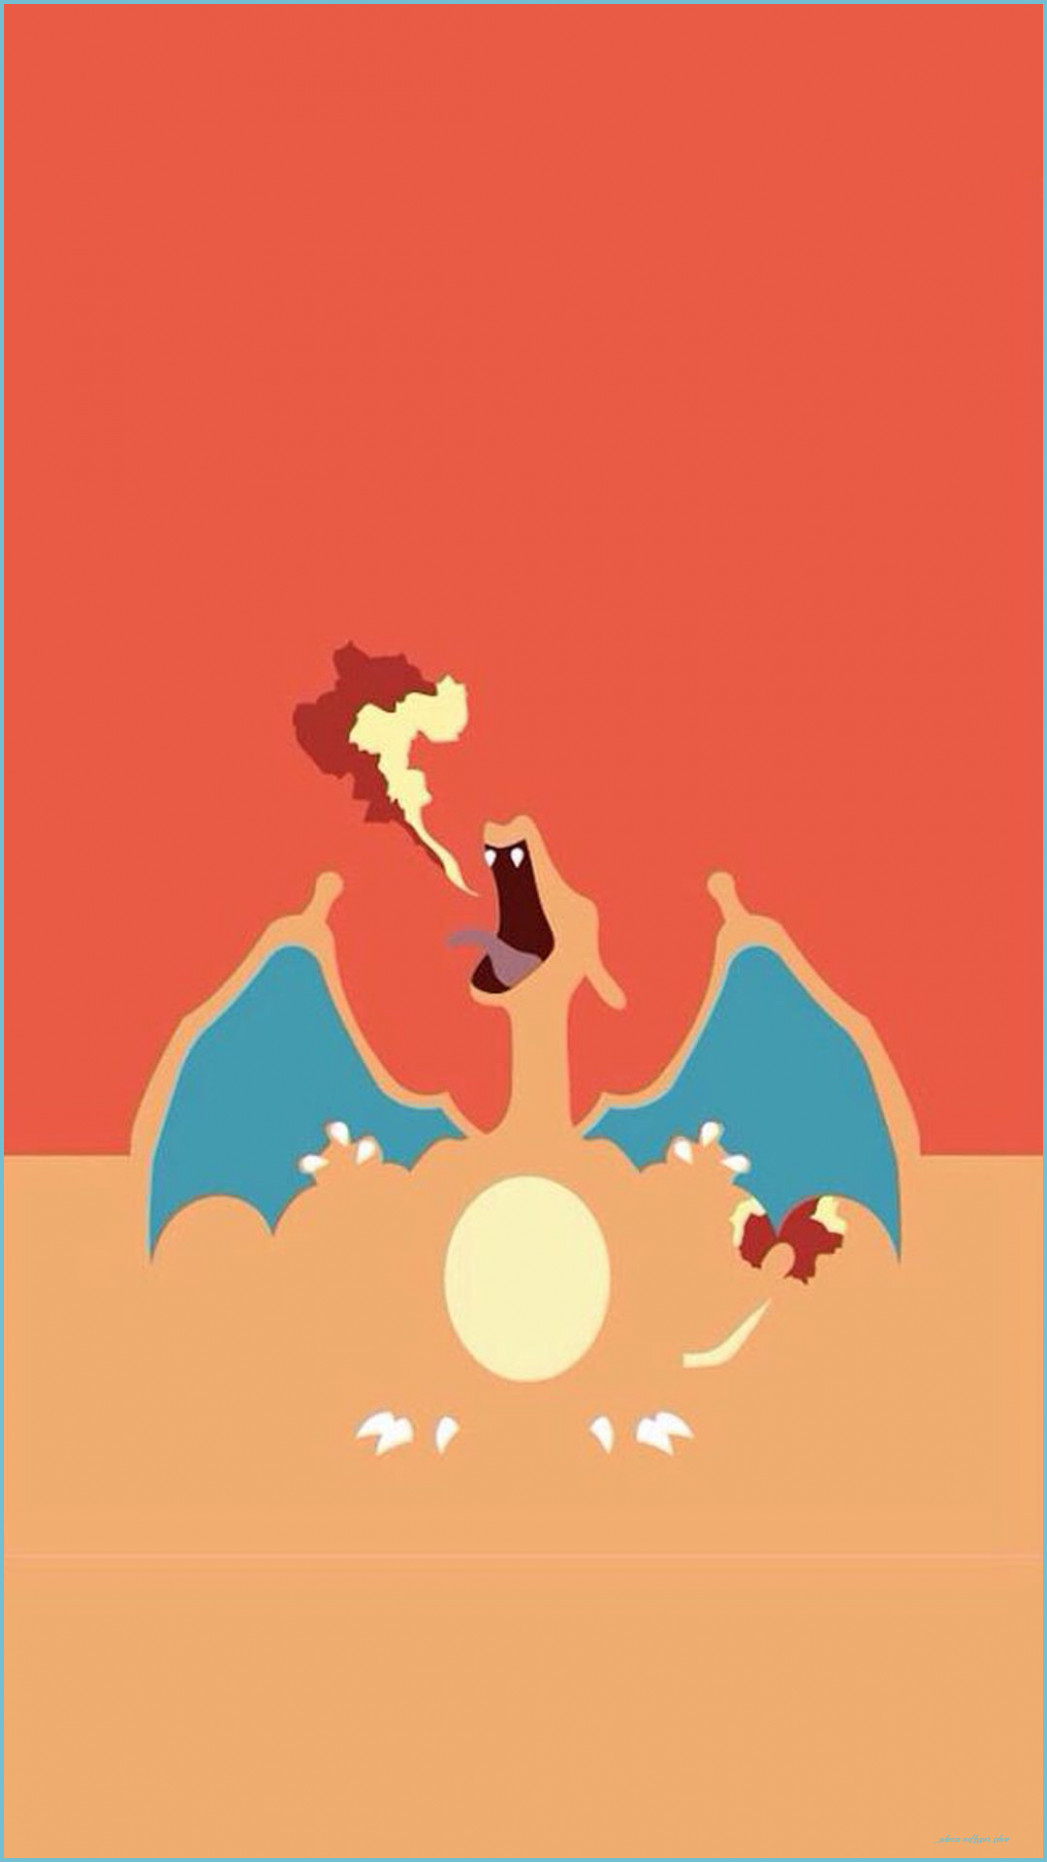 Charizard Pokemon IPhone Wallpaper In 10 iPhone Wallpaper Wallpaper iPhone